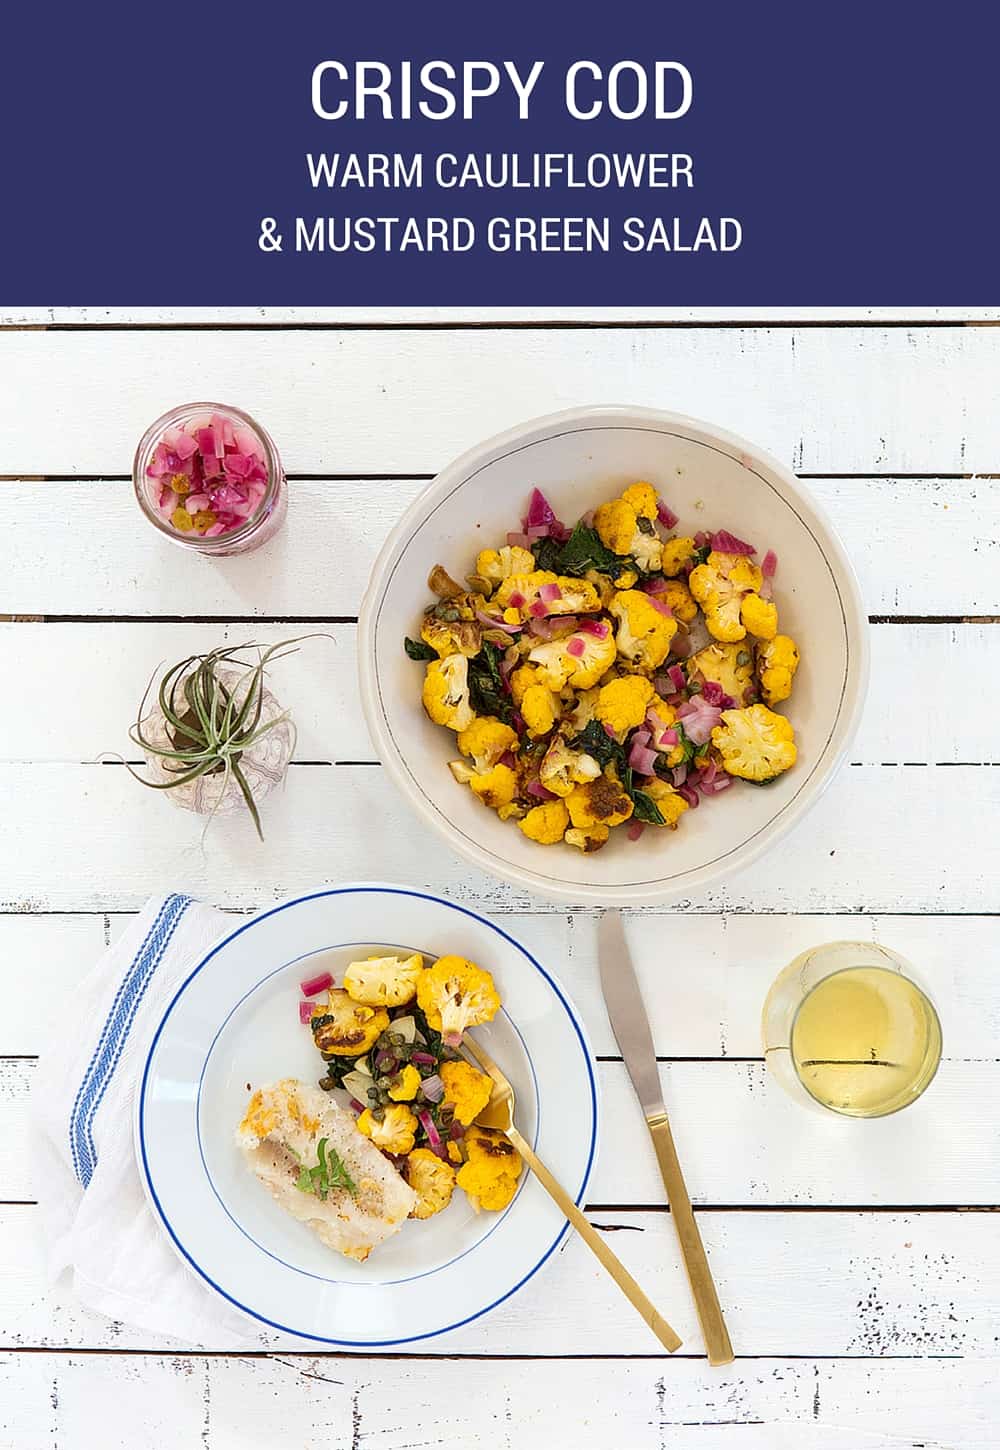 How To Make Crispy Cod with Warm Cauliflower & Mustard Green Salad